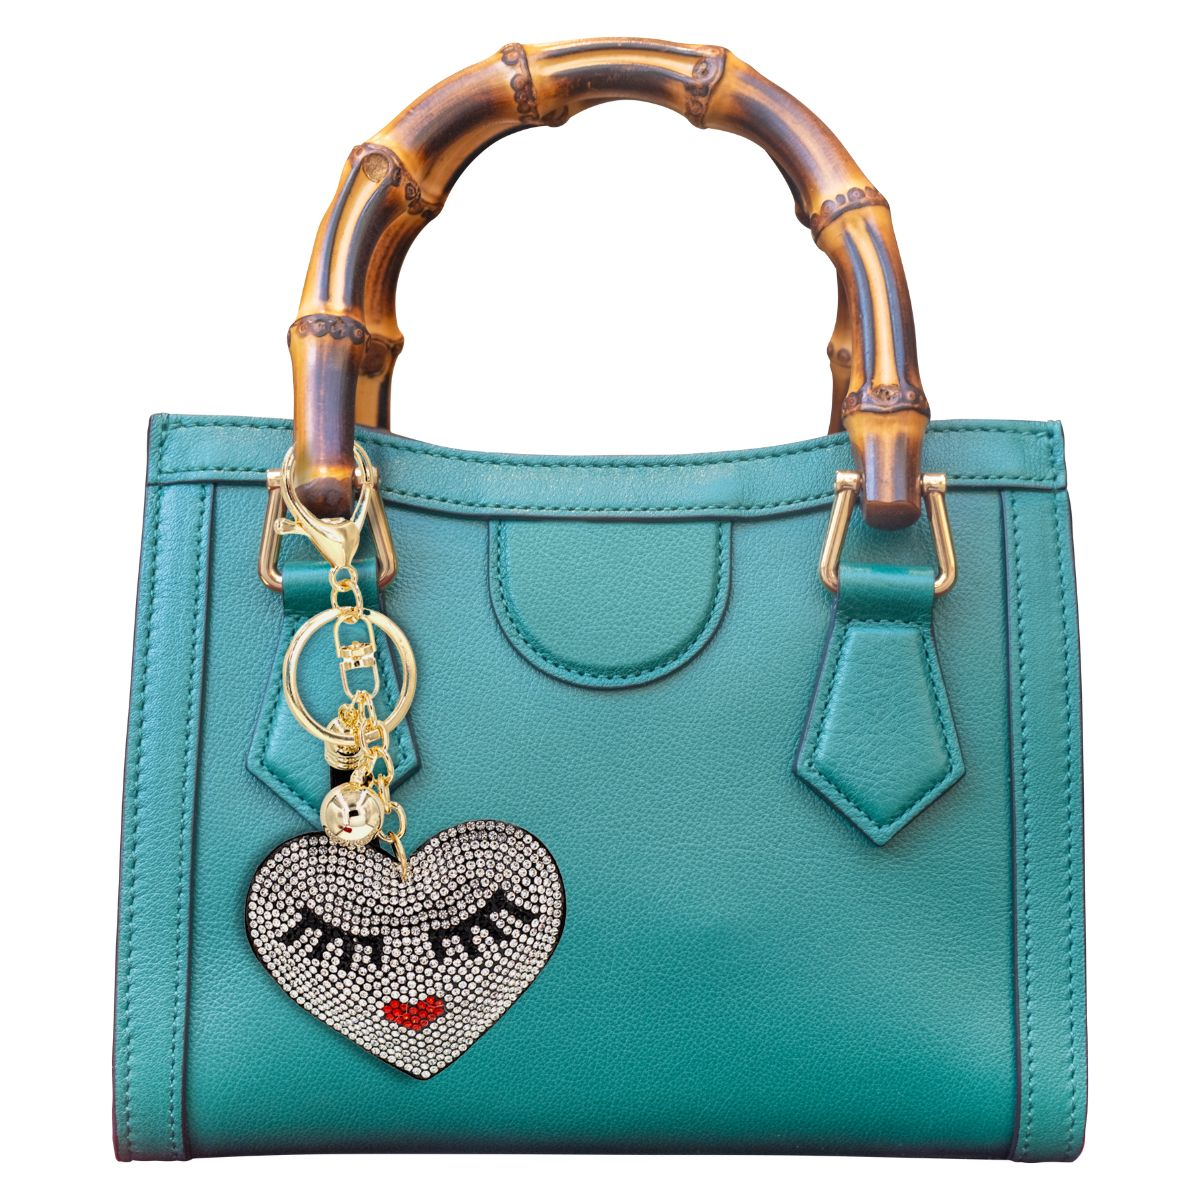 Sassy Heart Keychain Bag Charm